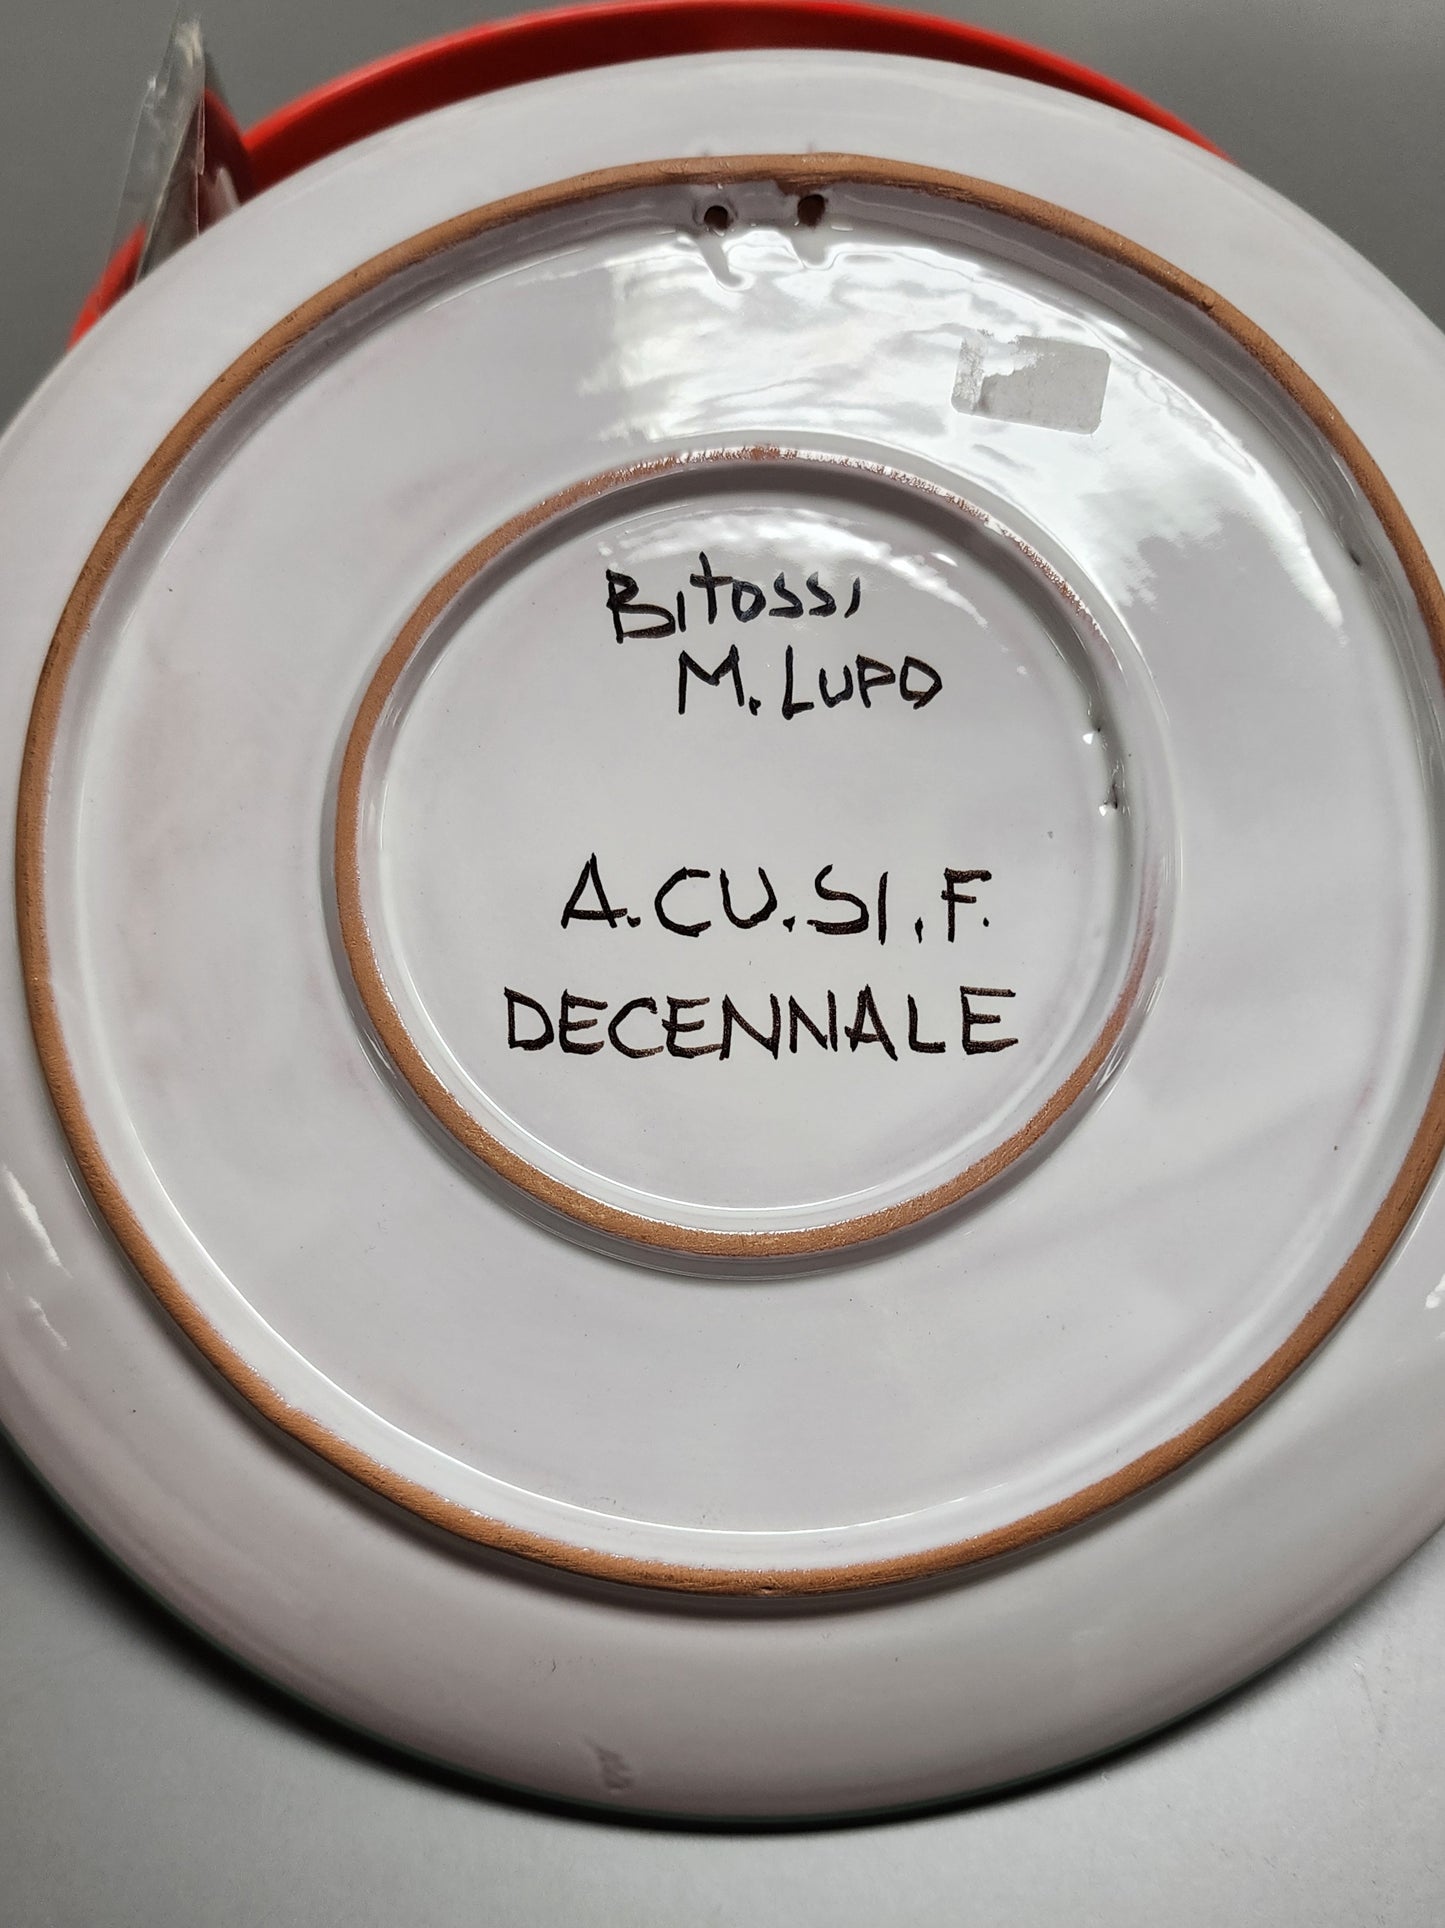 Bitossi Italian Pottery Plate